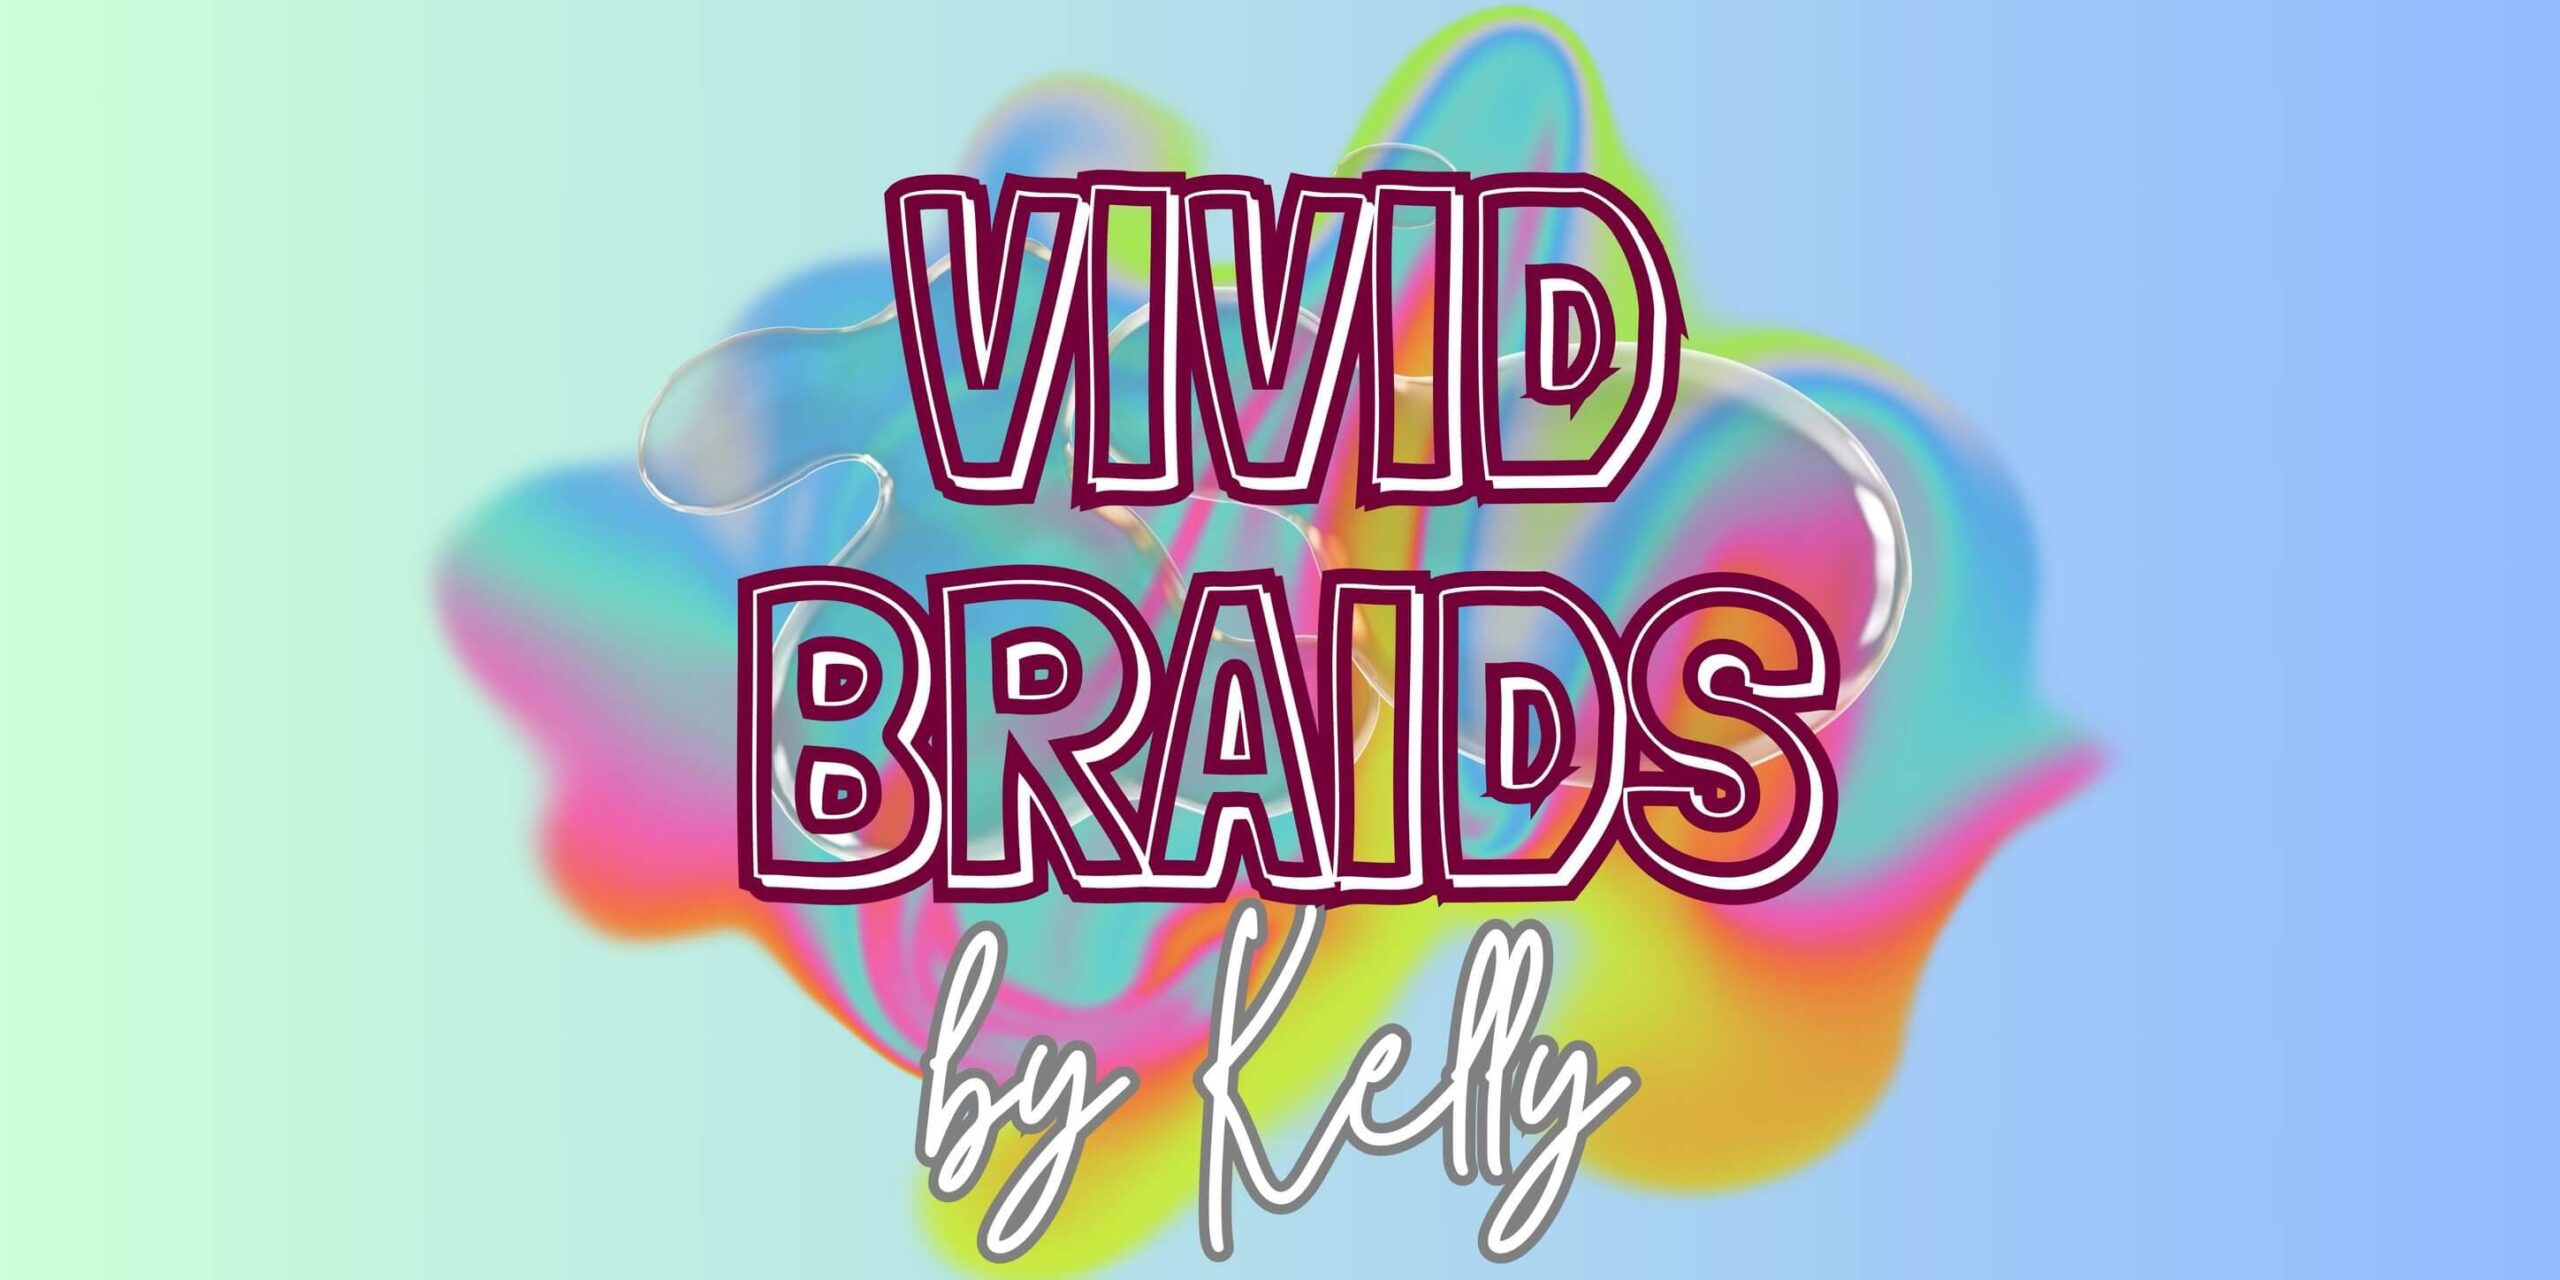 Vivid Braids by Kelly